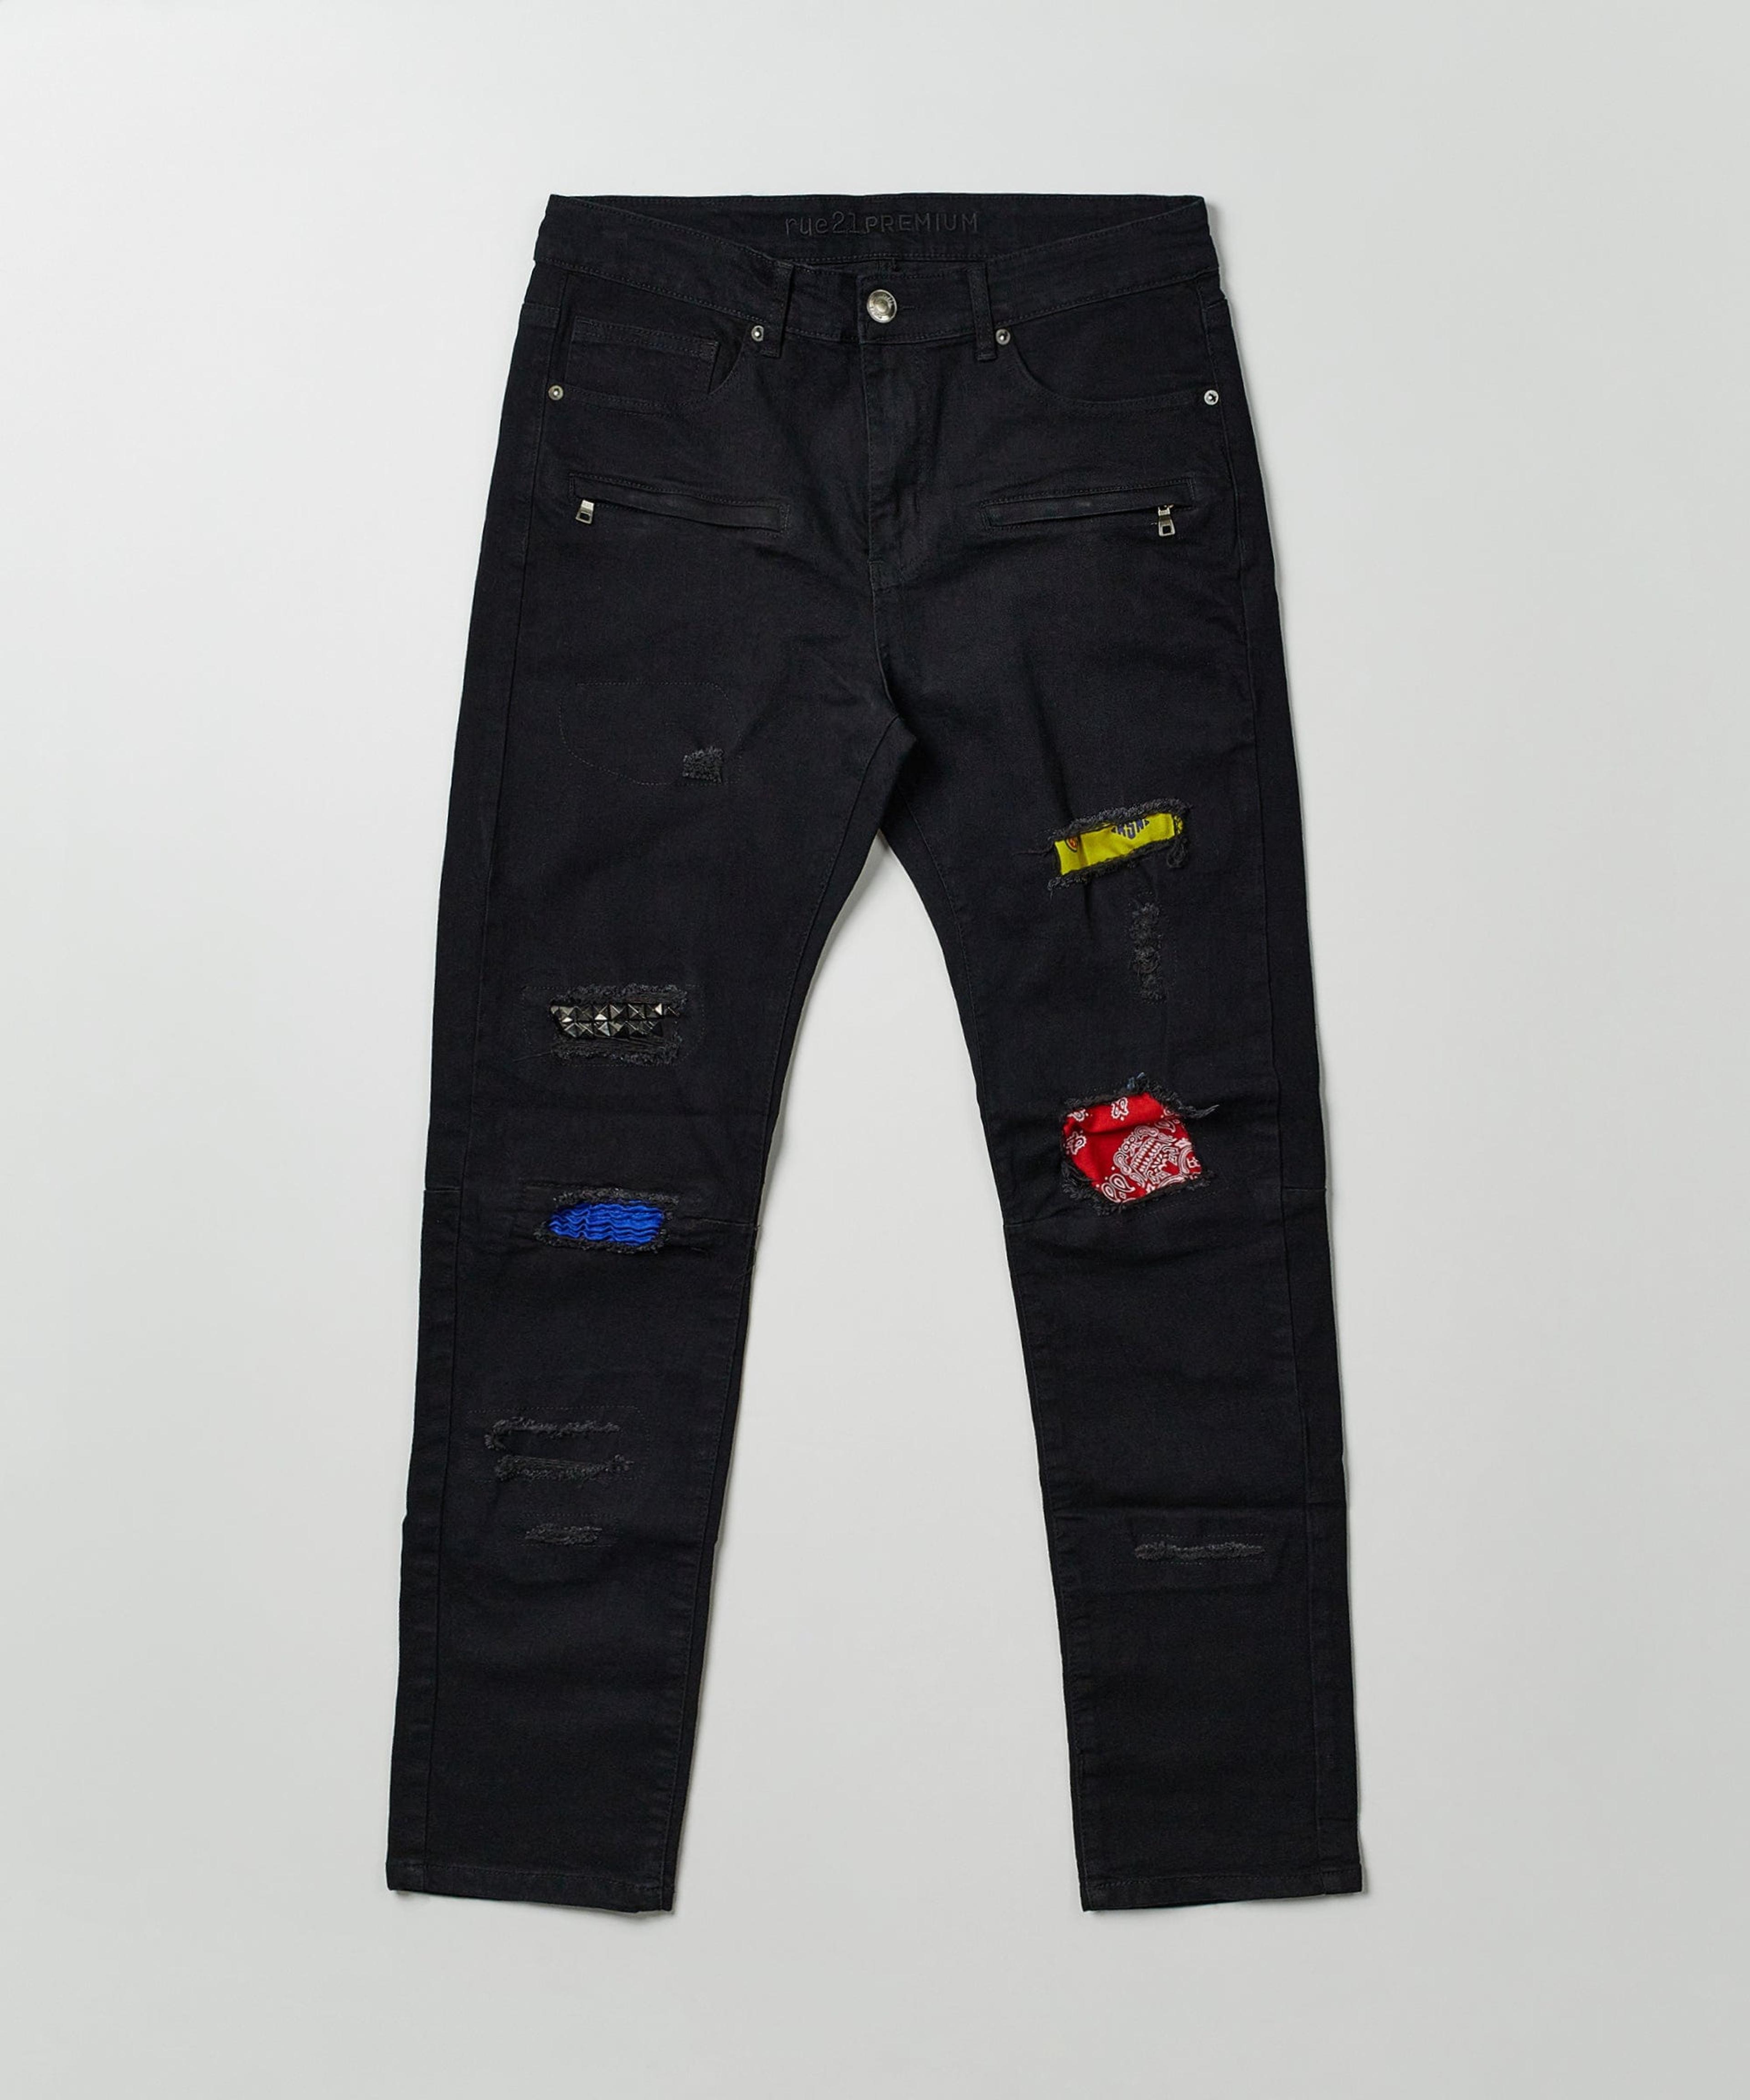 Alternate View 4 of Pike Bandana Color Back Black Denim Jeans